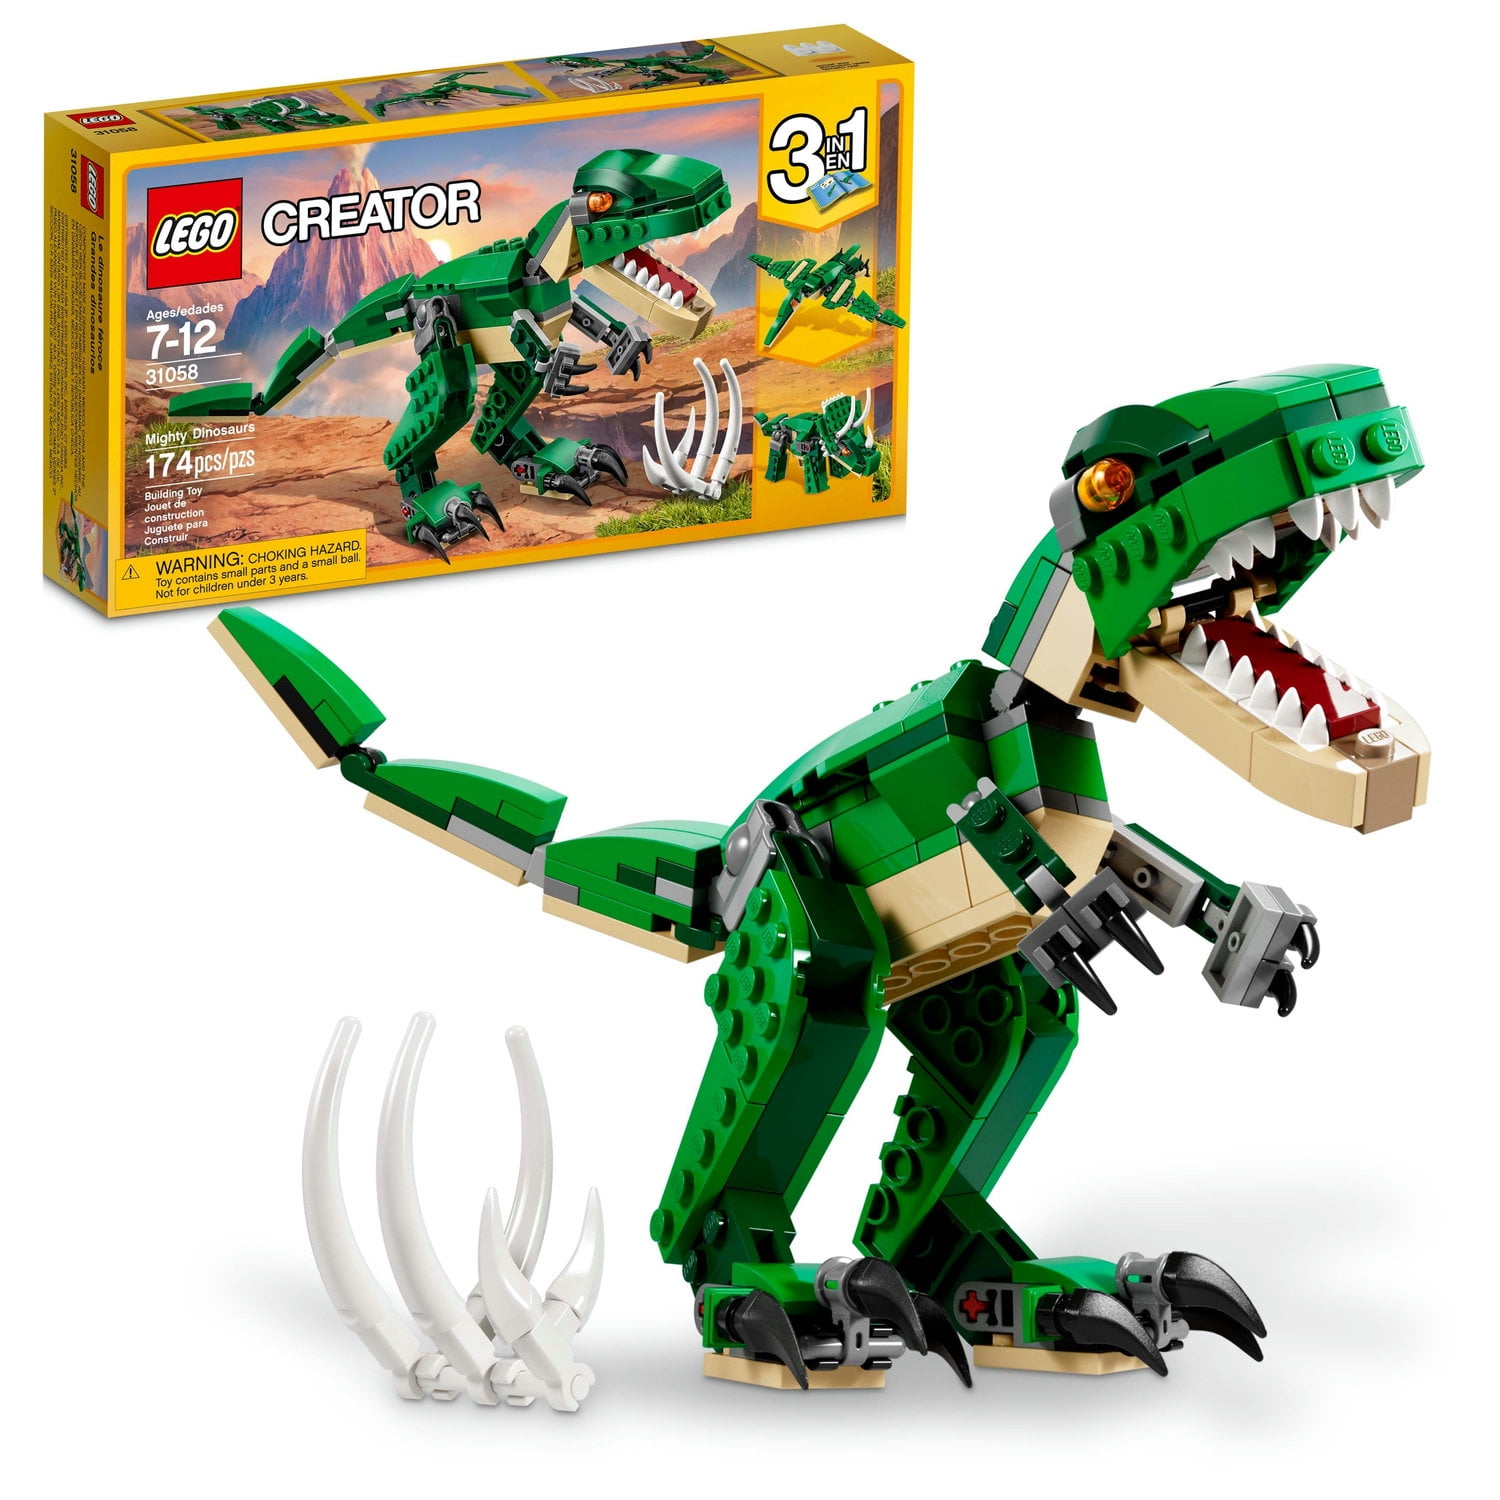 LEGO Mighty Dinosaurs LEGO Creator Toy 31058 